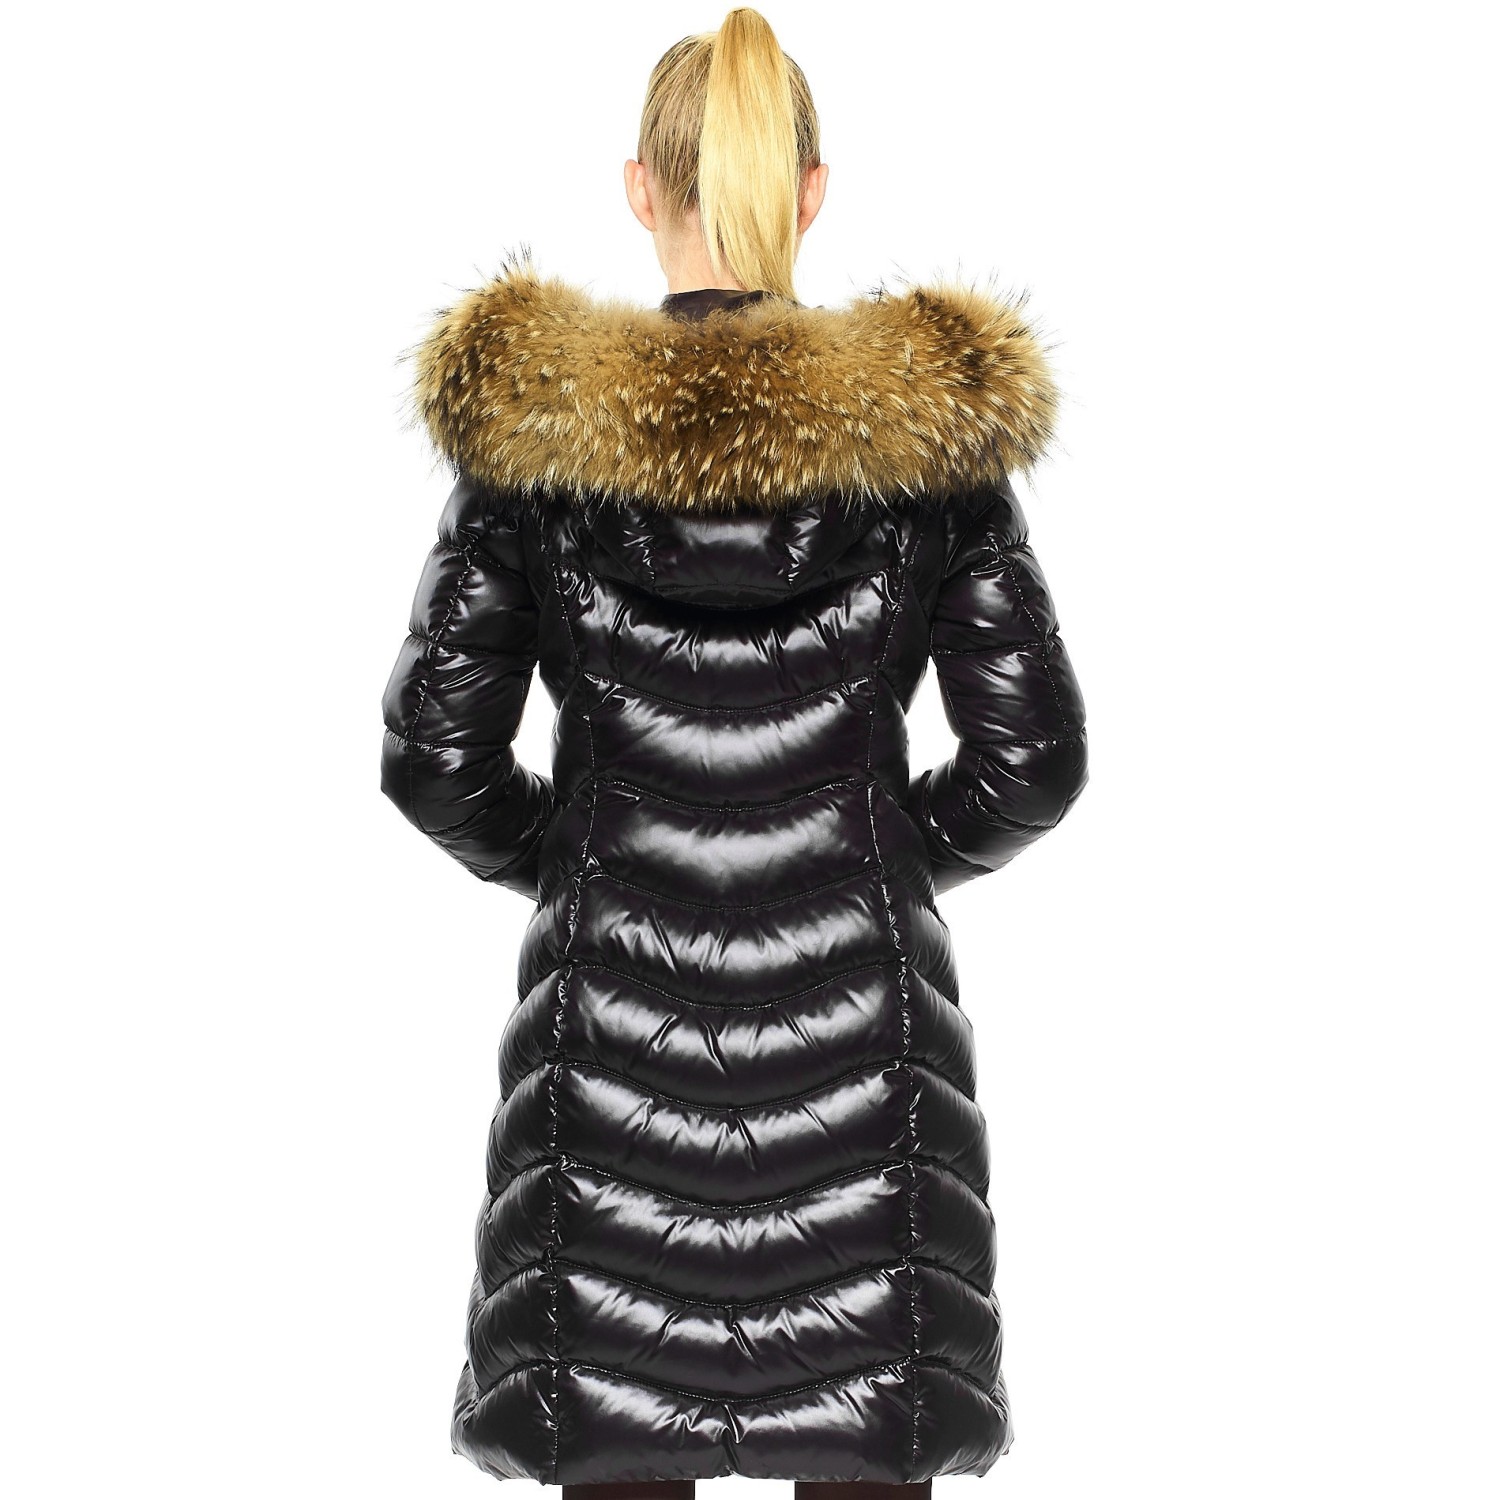 Puffer coat with fur hood